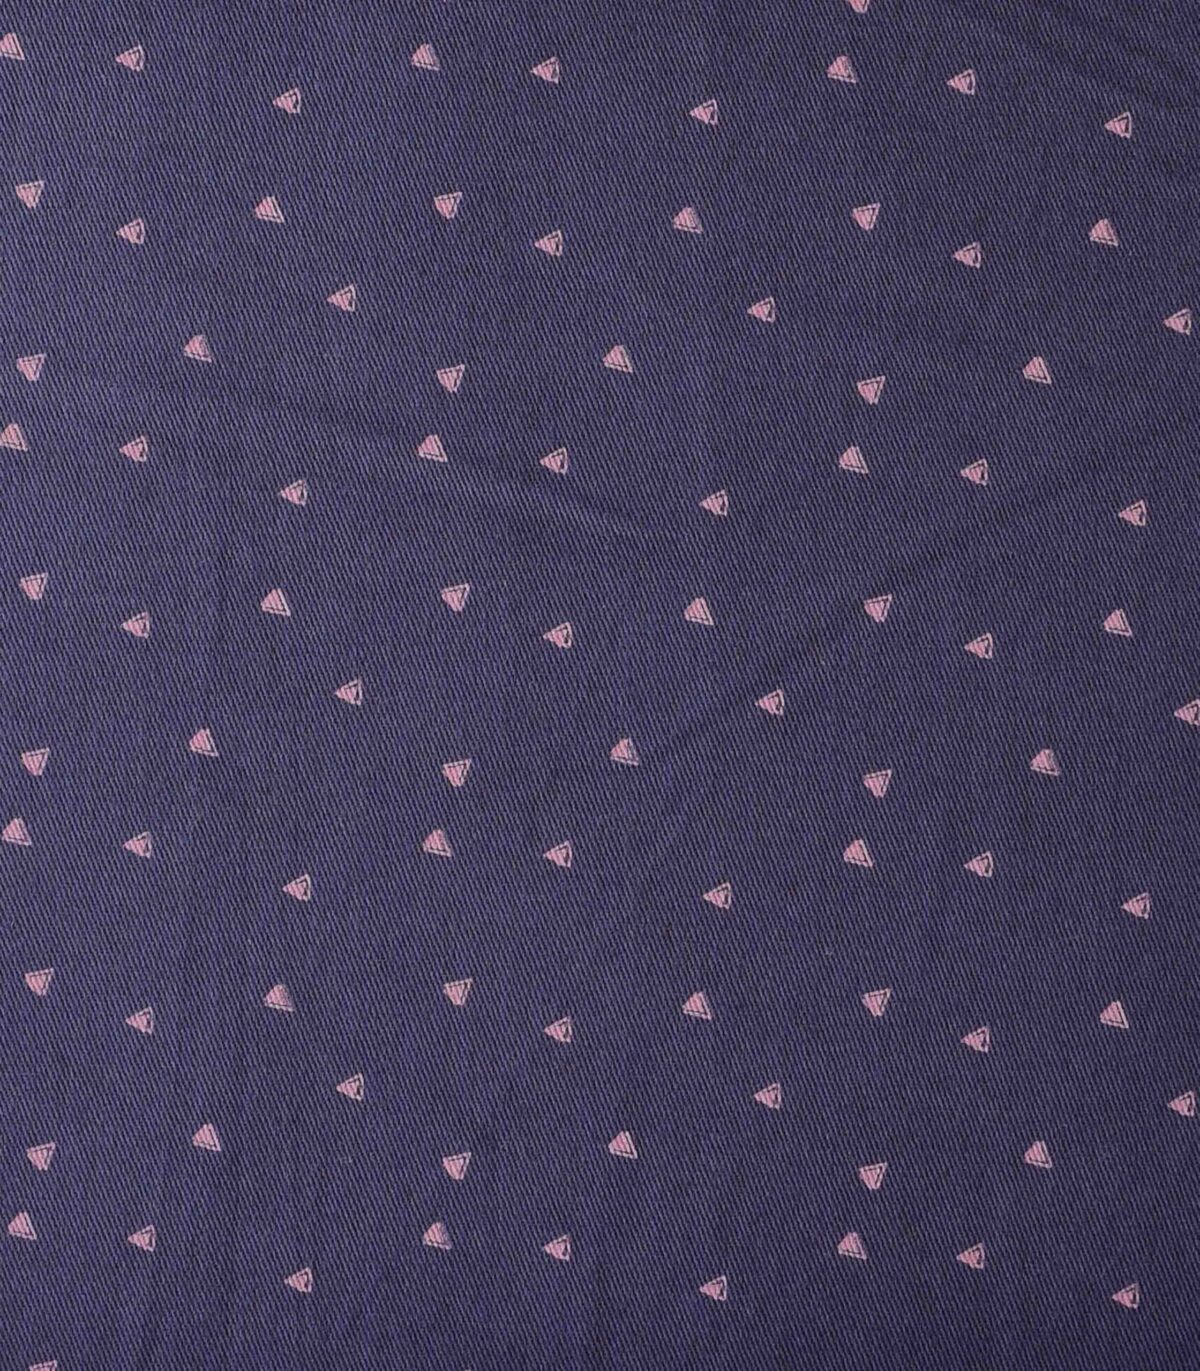 Cotton Lycra Tringle Print Woven Fabric